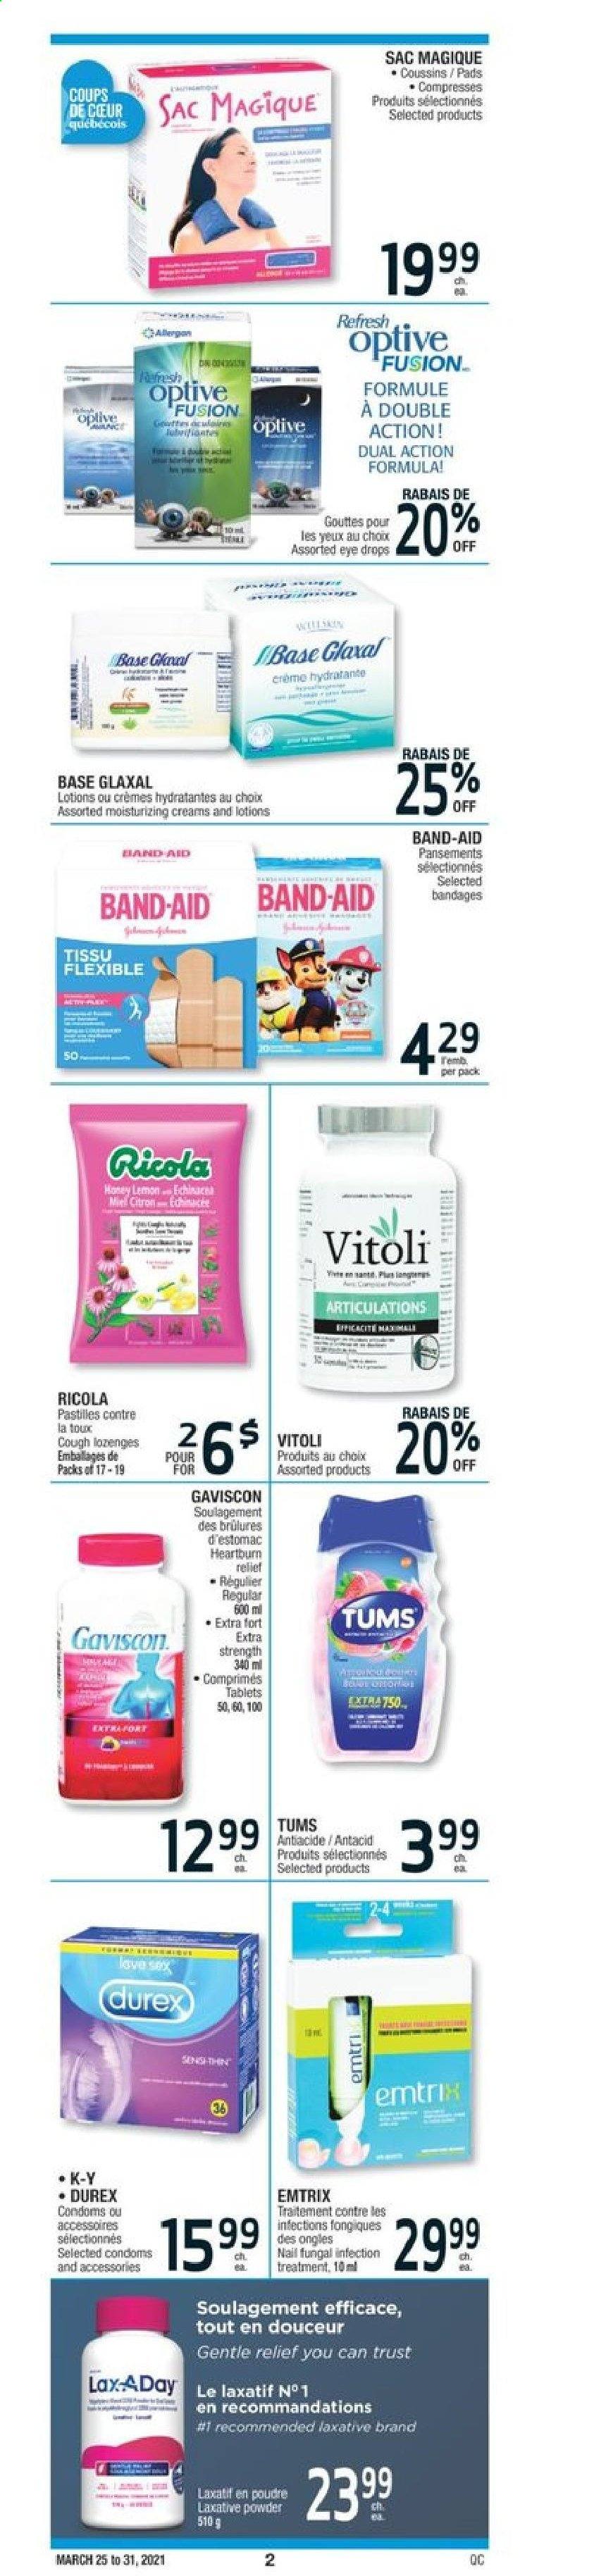 thumbnail - Jean Coutu Flyer - March 25, 2021 - March 31, 2021 - Sales products - Ricola, Santa, pastilles, honey, eye drops, Gaviscon, Antacid, laxative. Page 10.